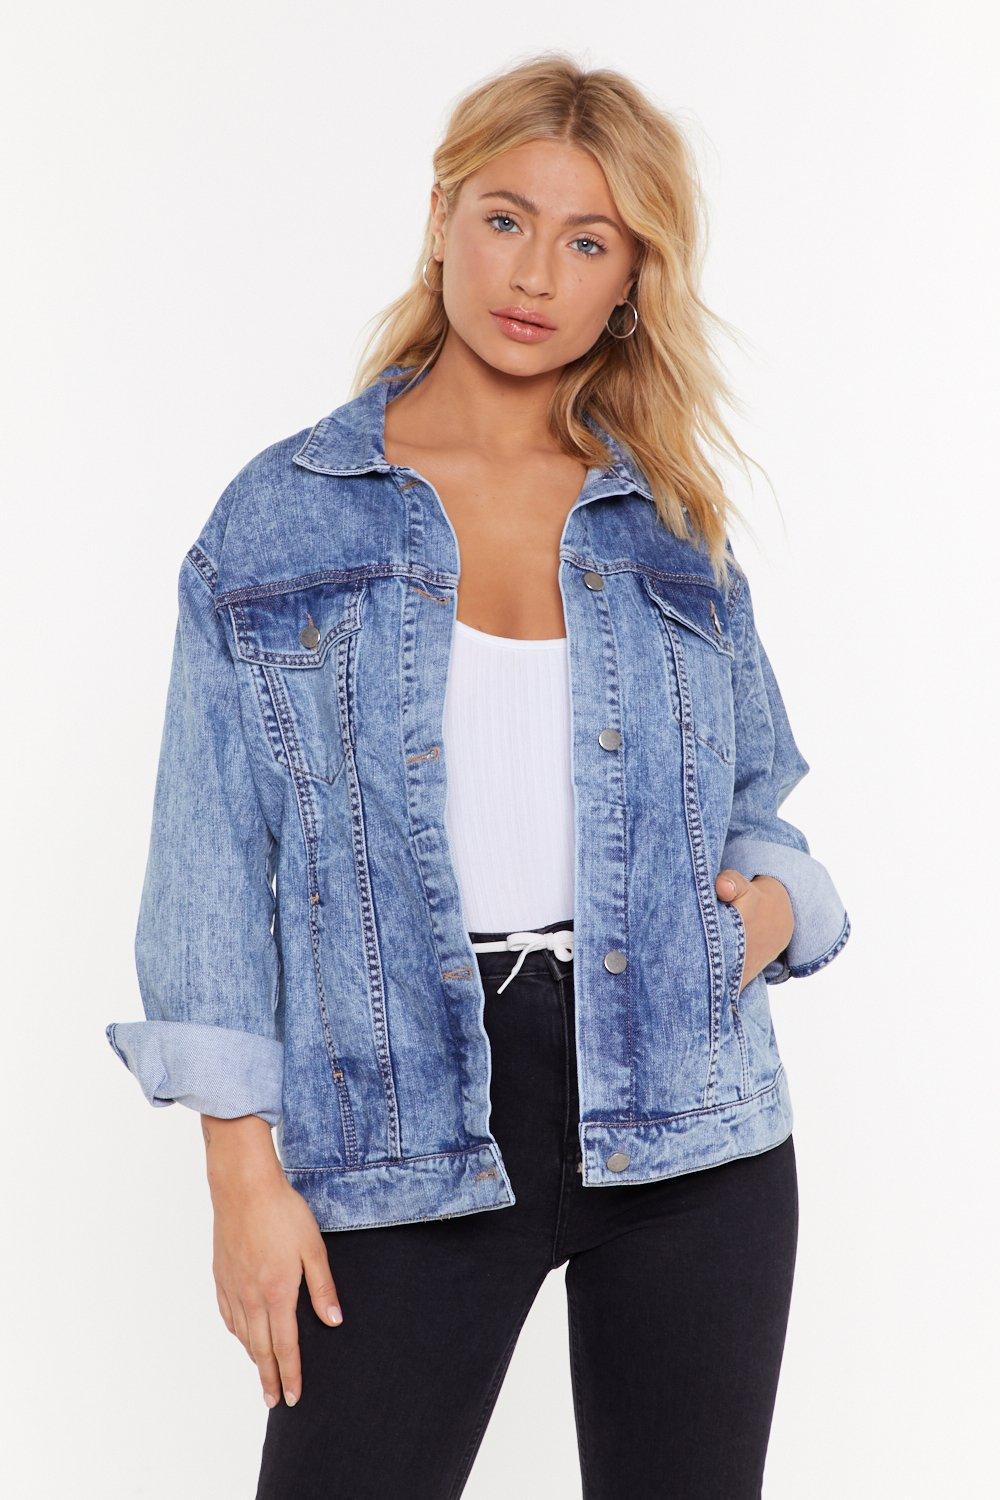 oversized jean jacket canada